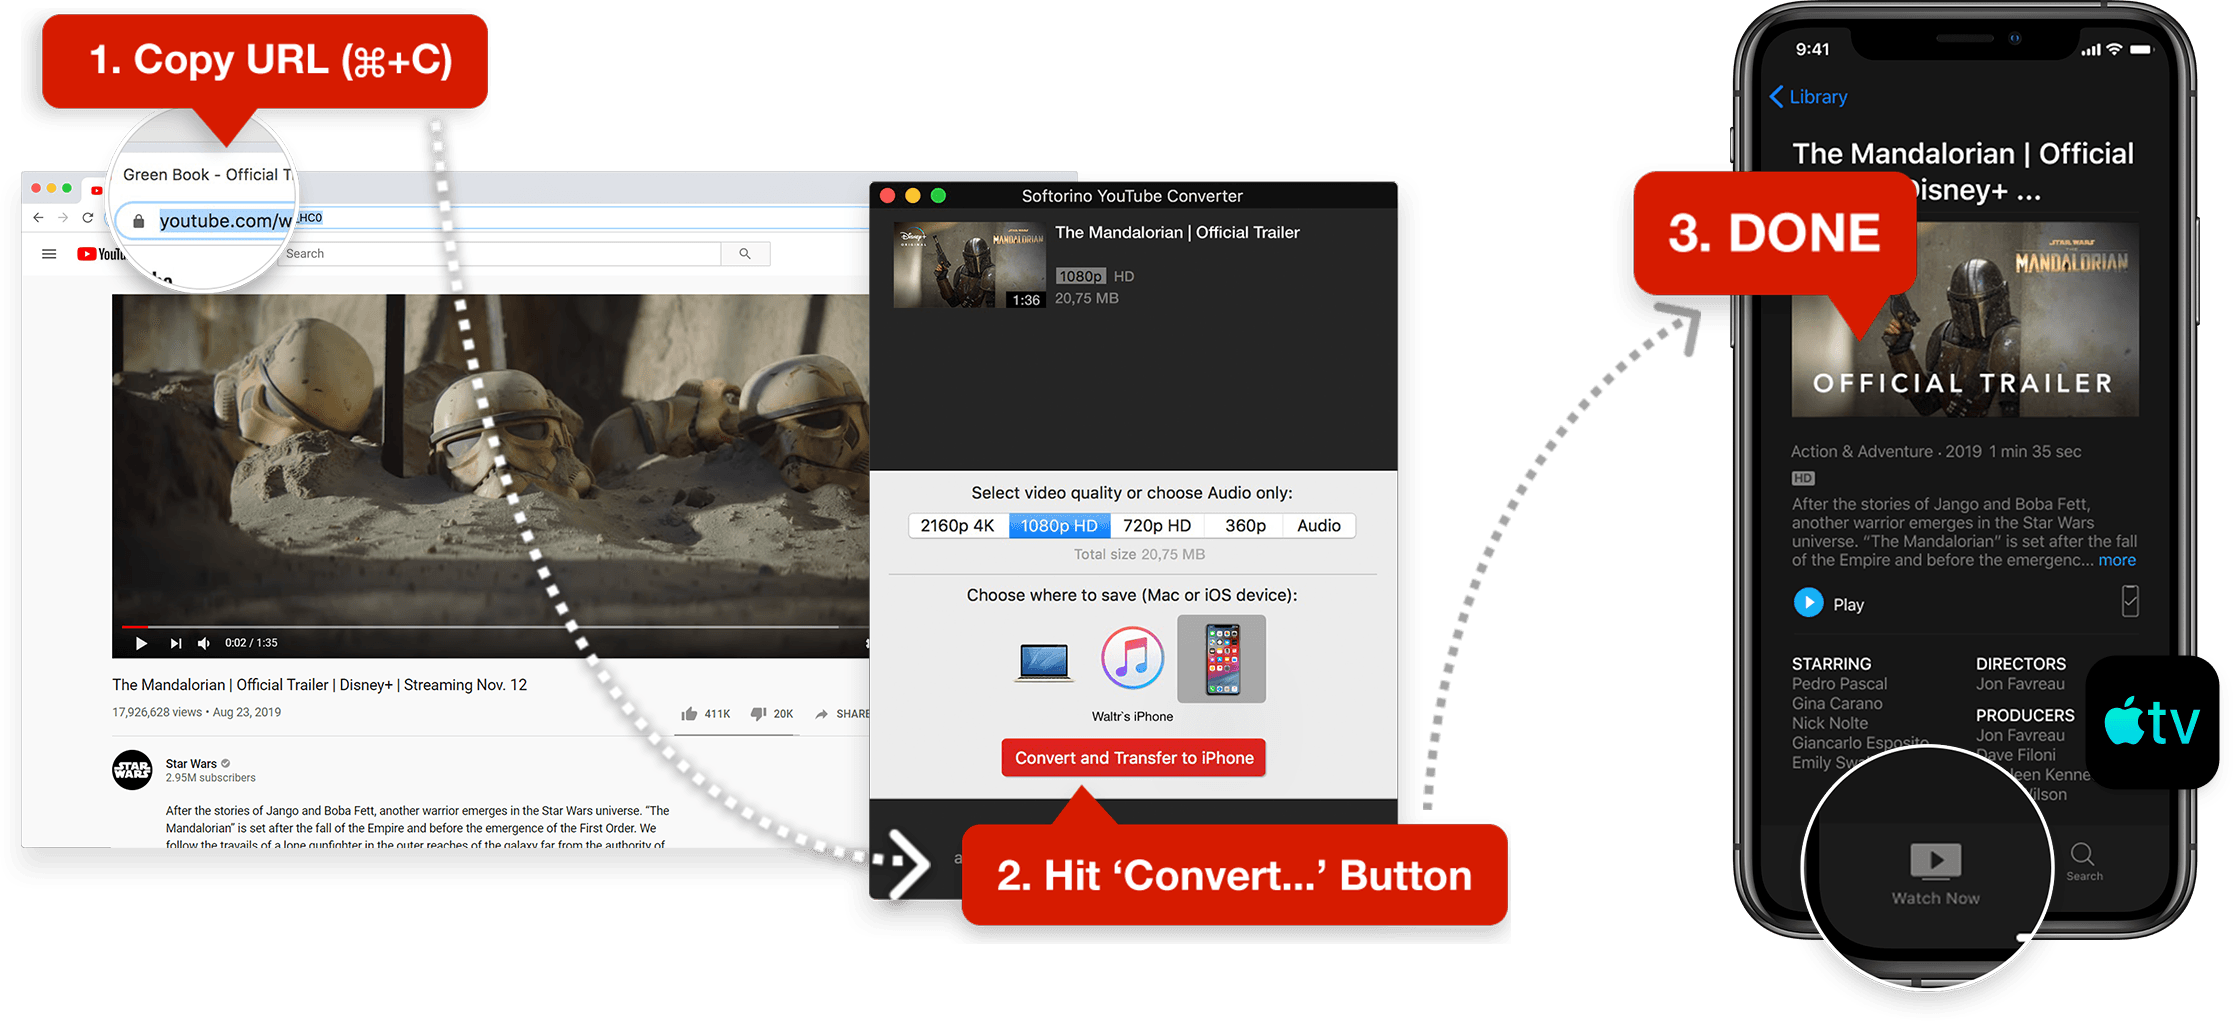 softorino youtube converter 2 audio 0mb